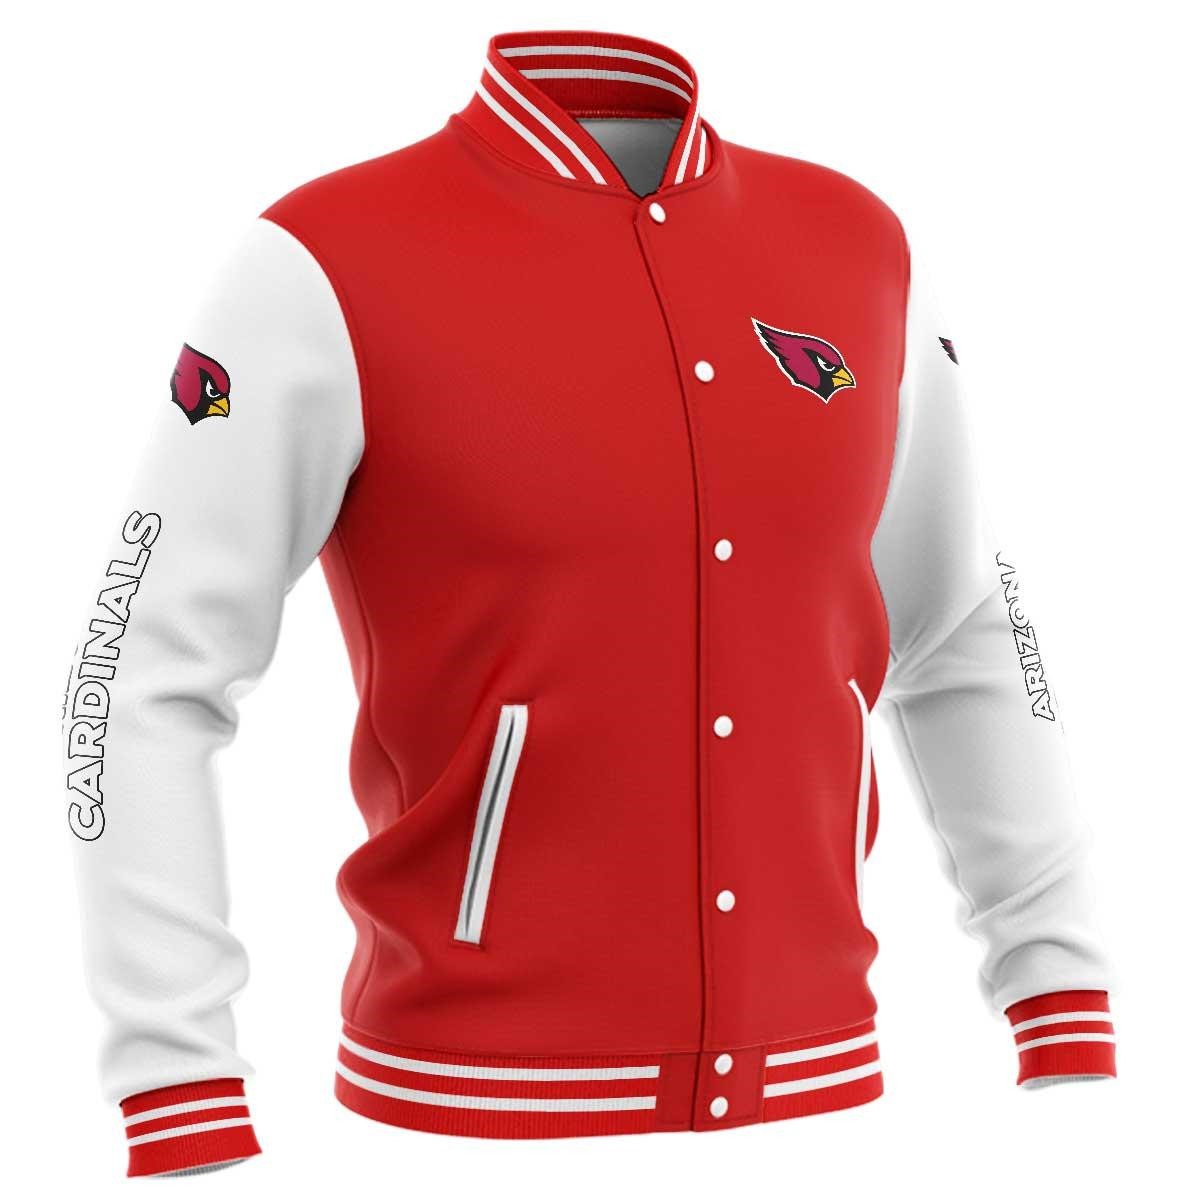 Arizona Cardinals Baseball Jacket